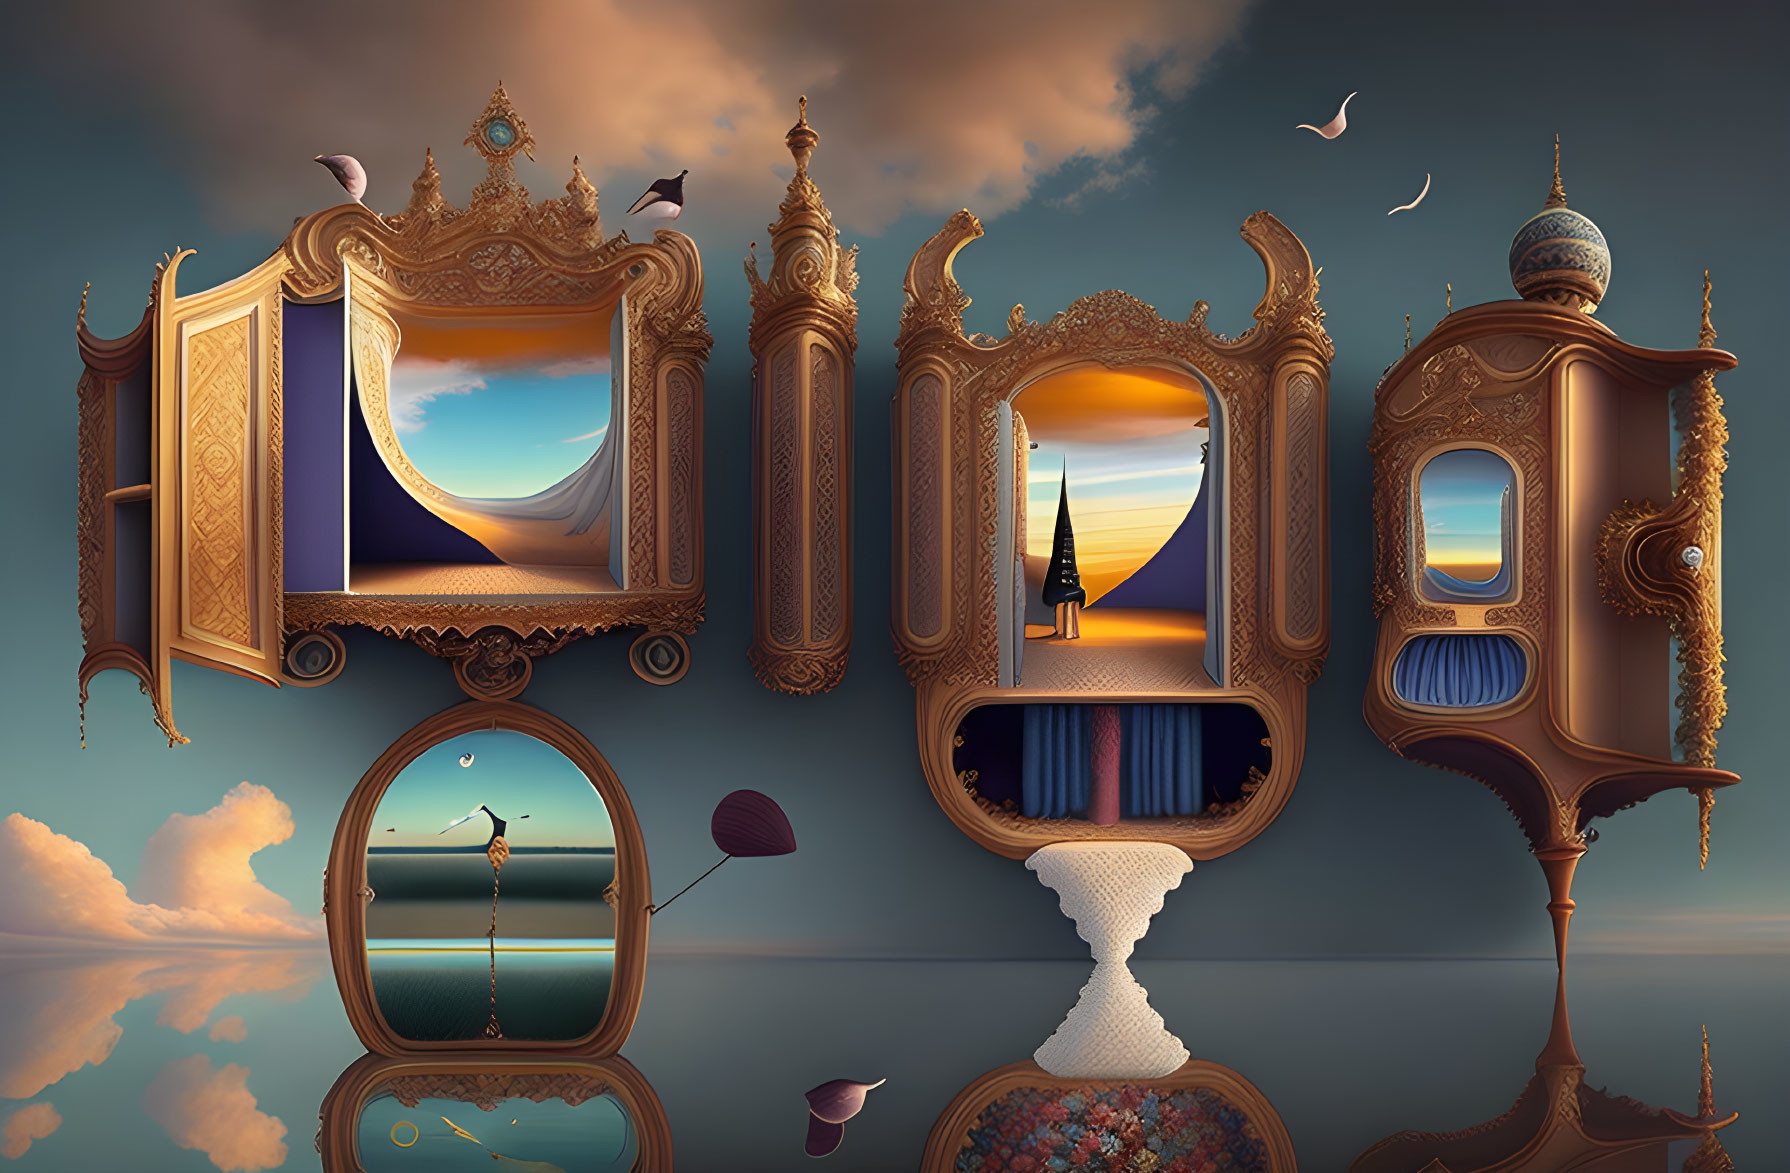 Ornate Frames Depicting Surreal Land, Sky, and Sea Elements